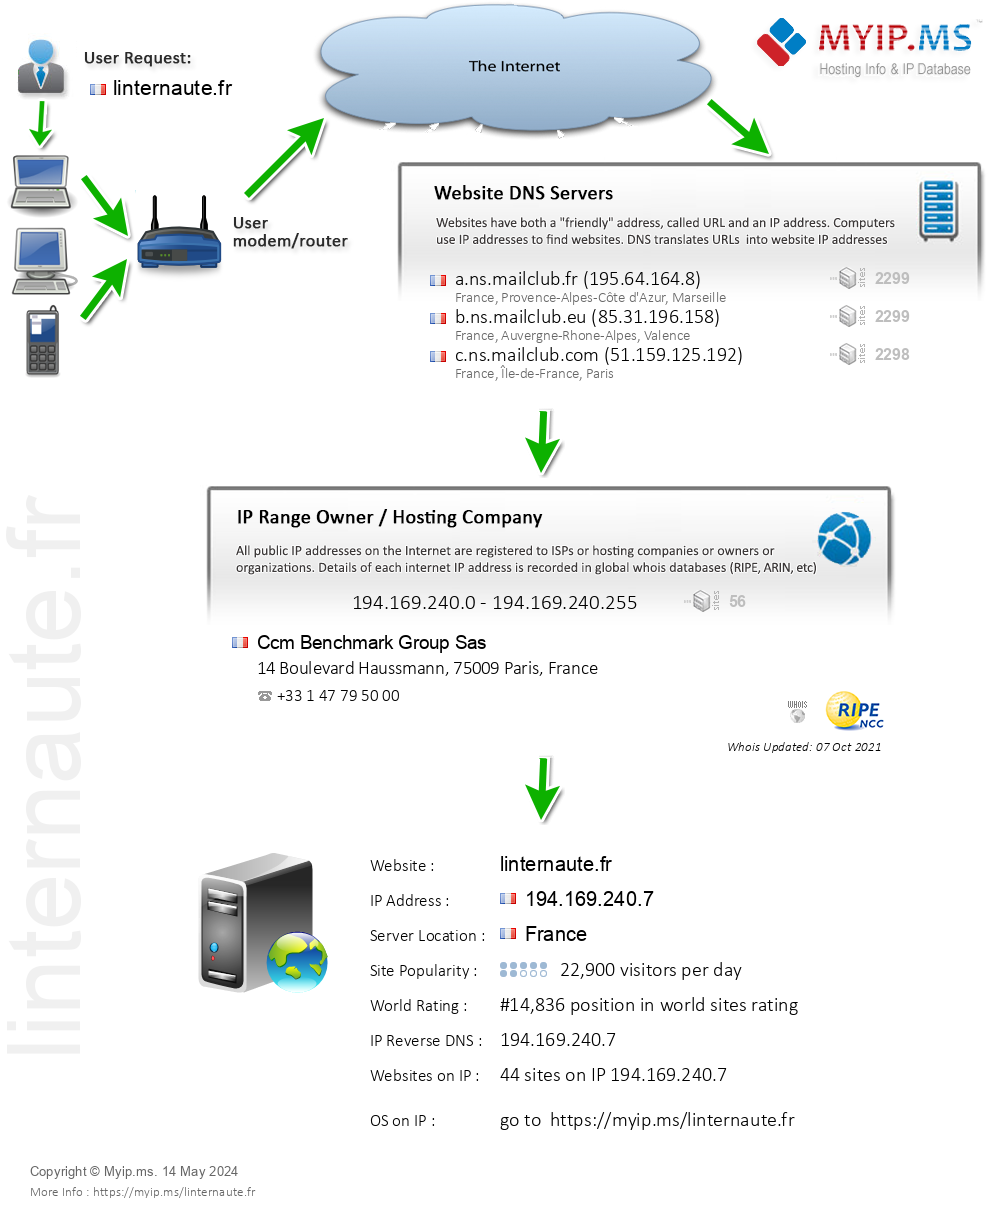 Linternaute.fr - Website Hosting Visual IP Diagram